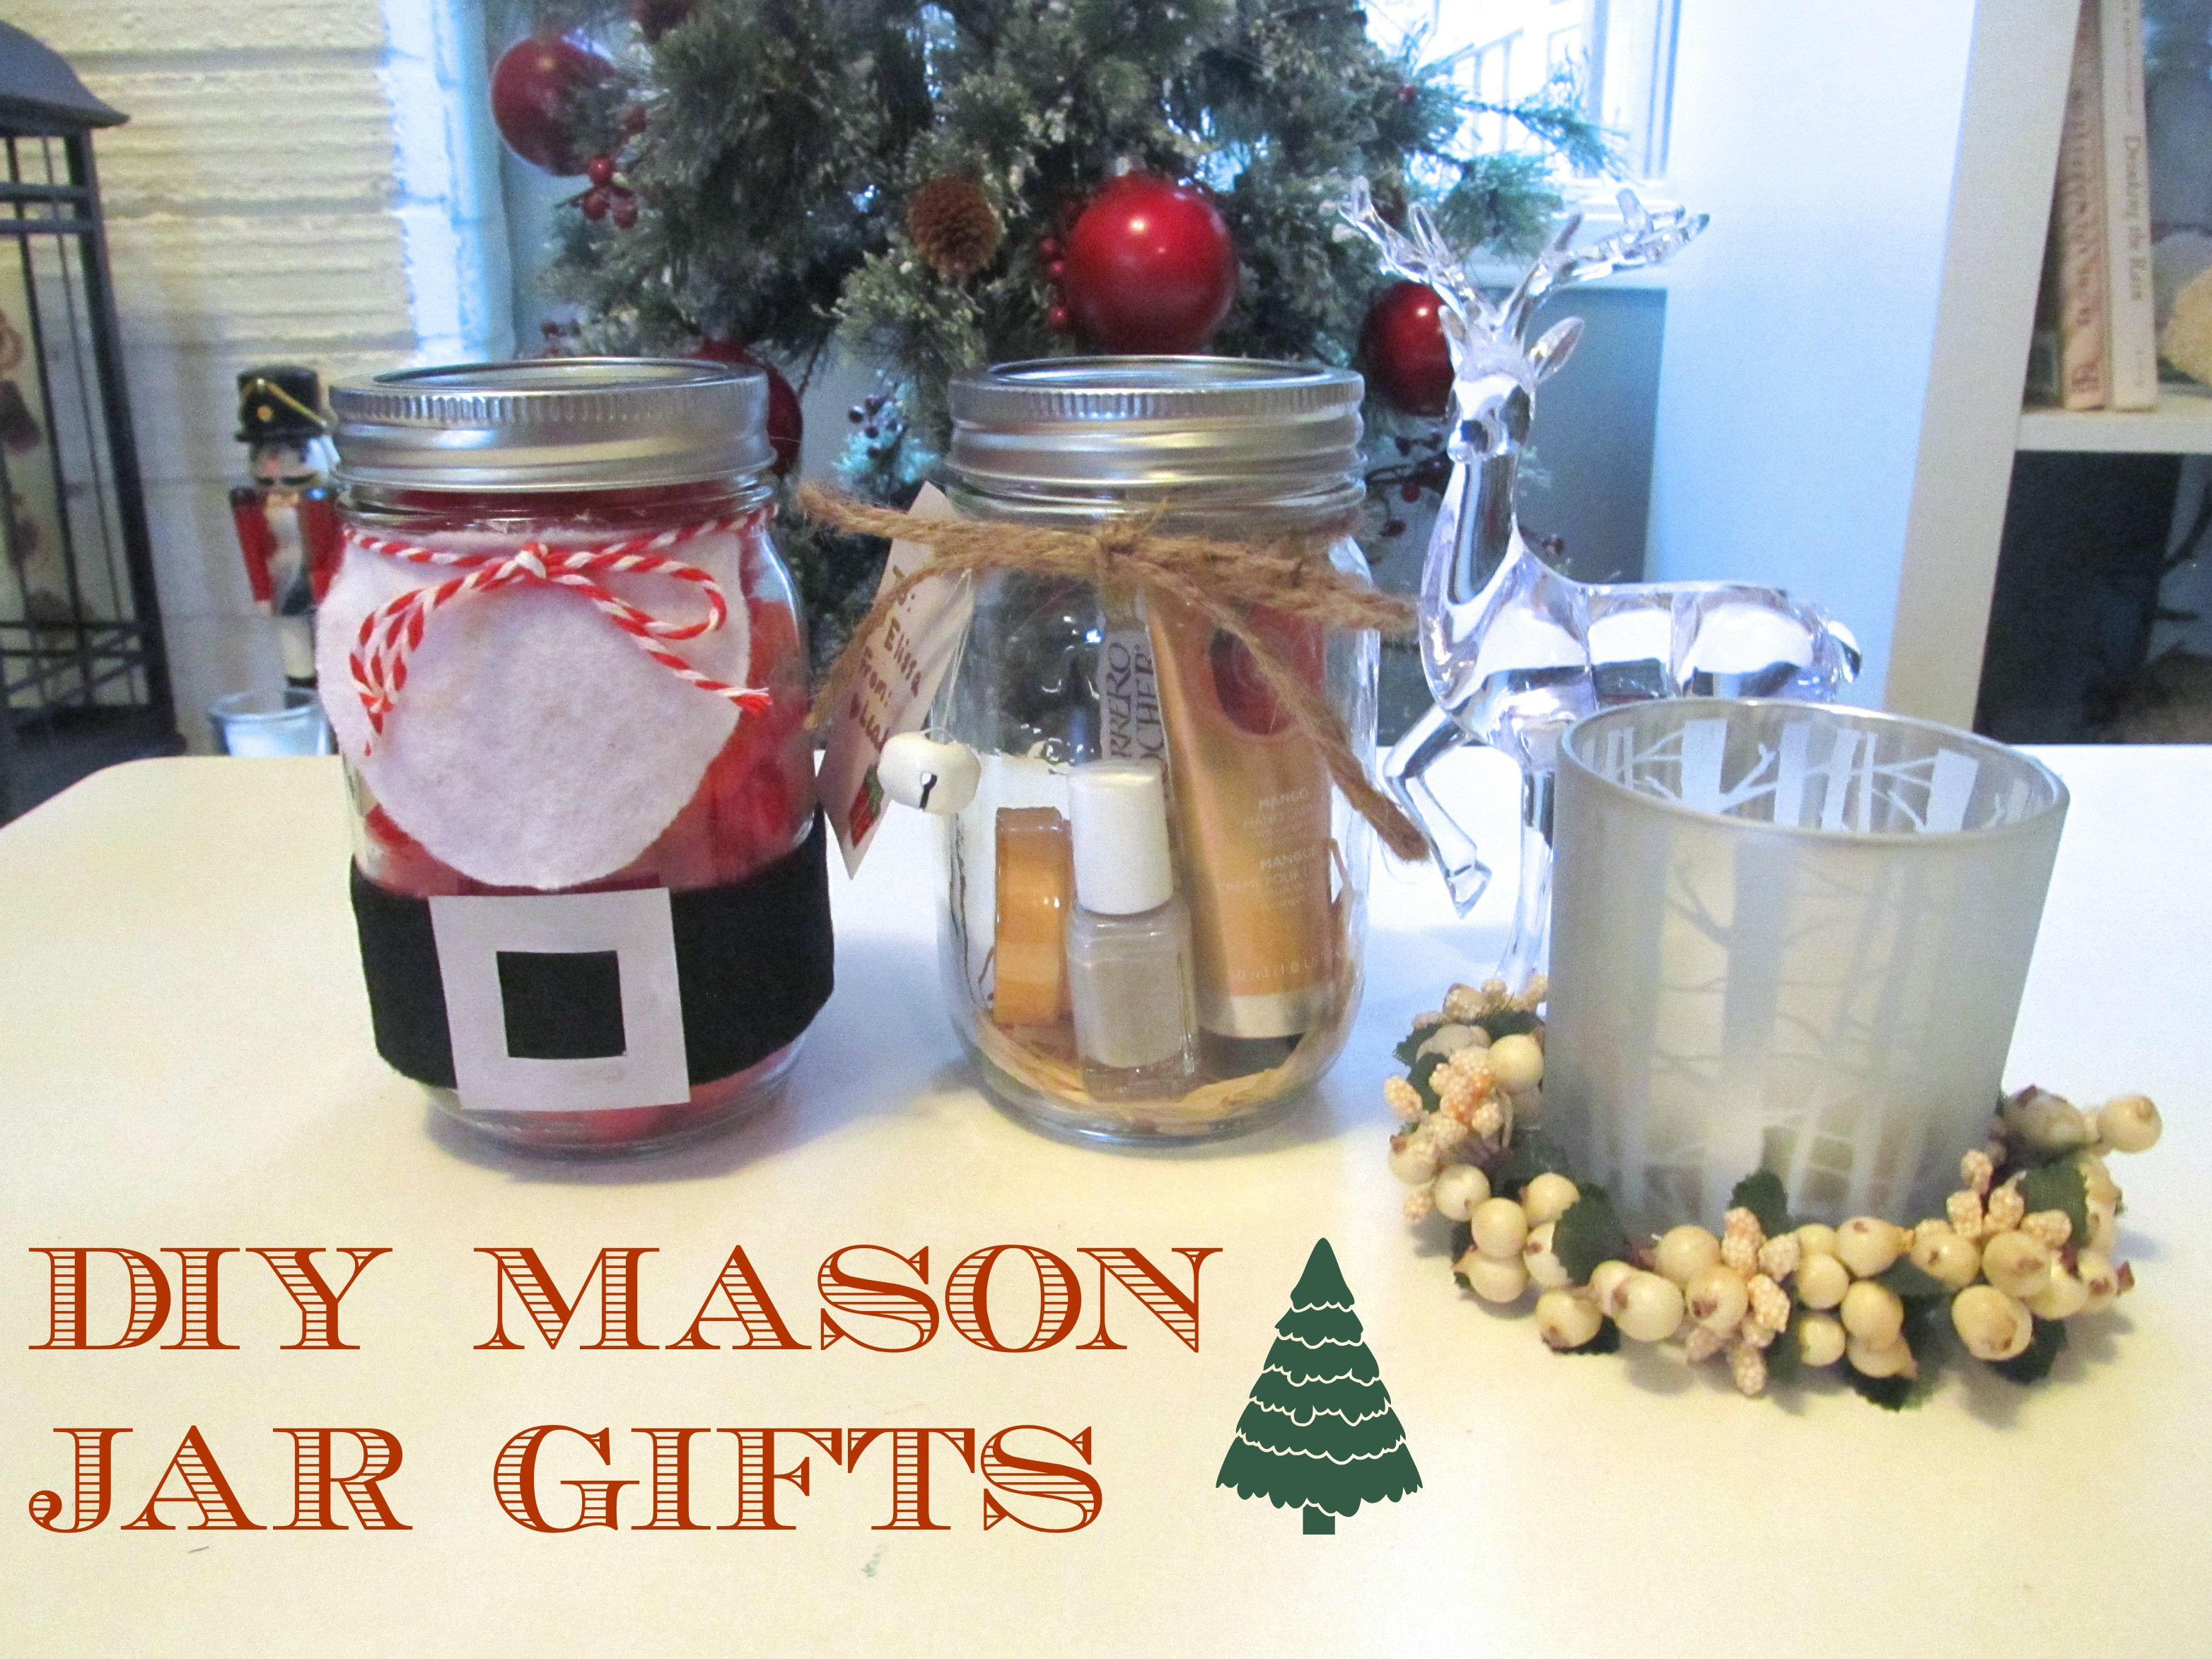 Best ideas about DIY Mason Jar Gifts
. Save or Pin DIY Mason Jar Gifts – Ellerow Now.